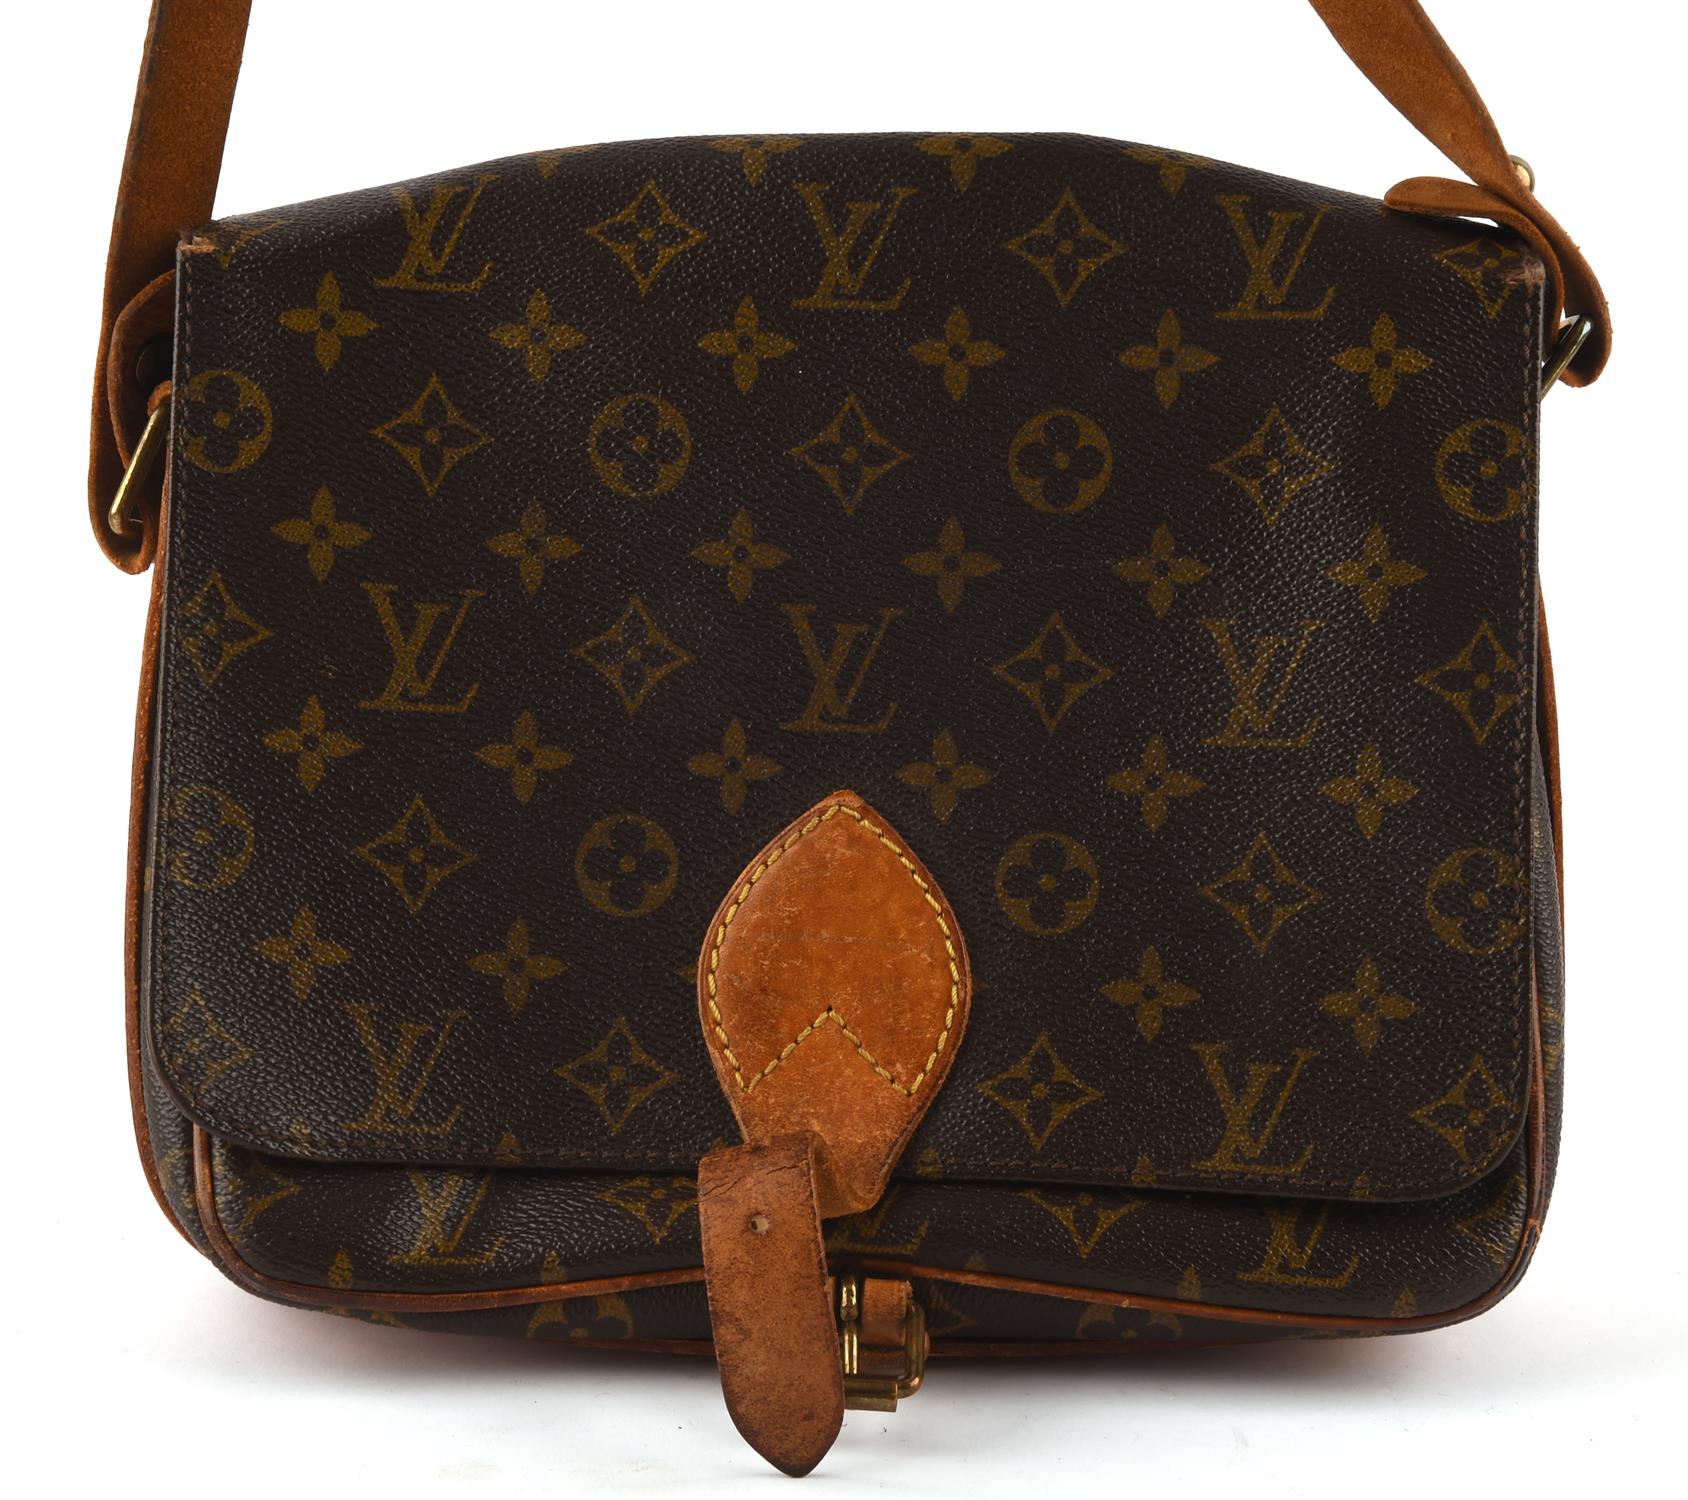 LOUIS VUITTON vintage CARTOUCHIERE canvas coated leather cross-body shoulder handbag - Image 2 of 6